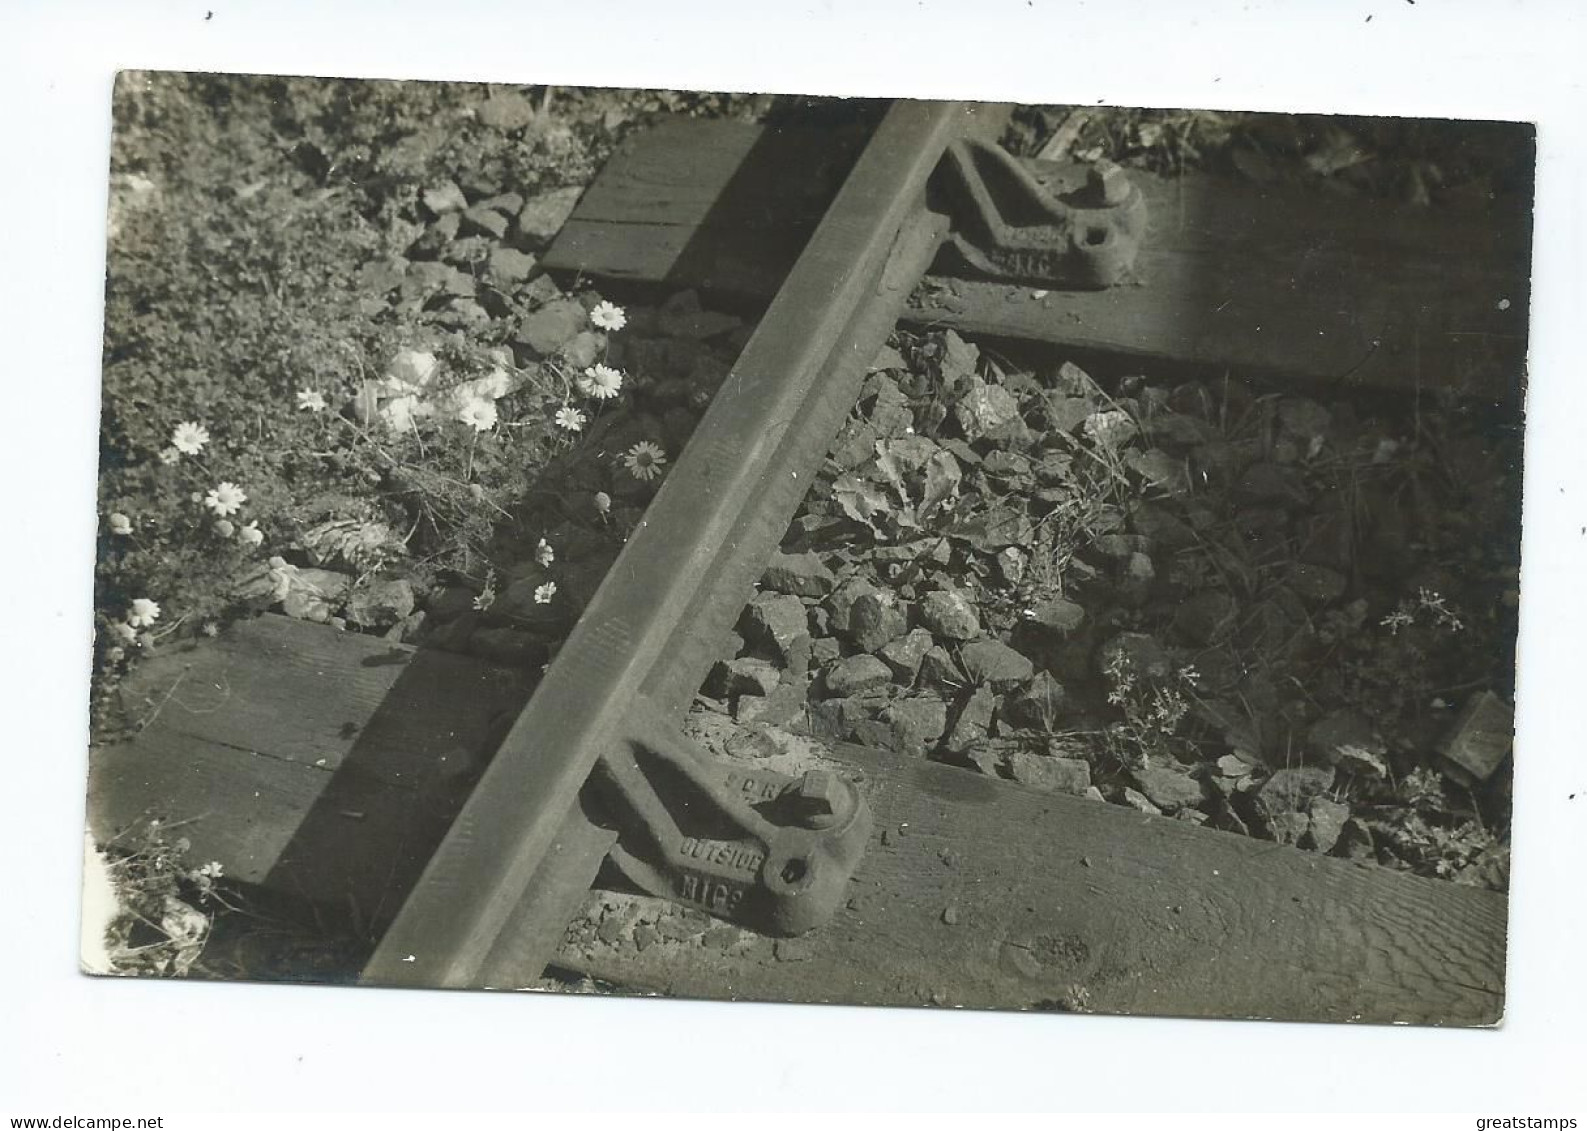 Postcard   Railway Track And Chair Detail Rp Unknown Origin - Matériel